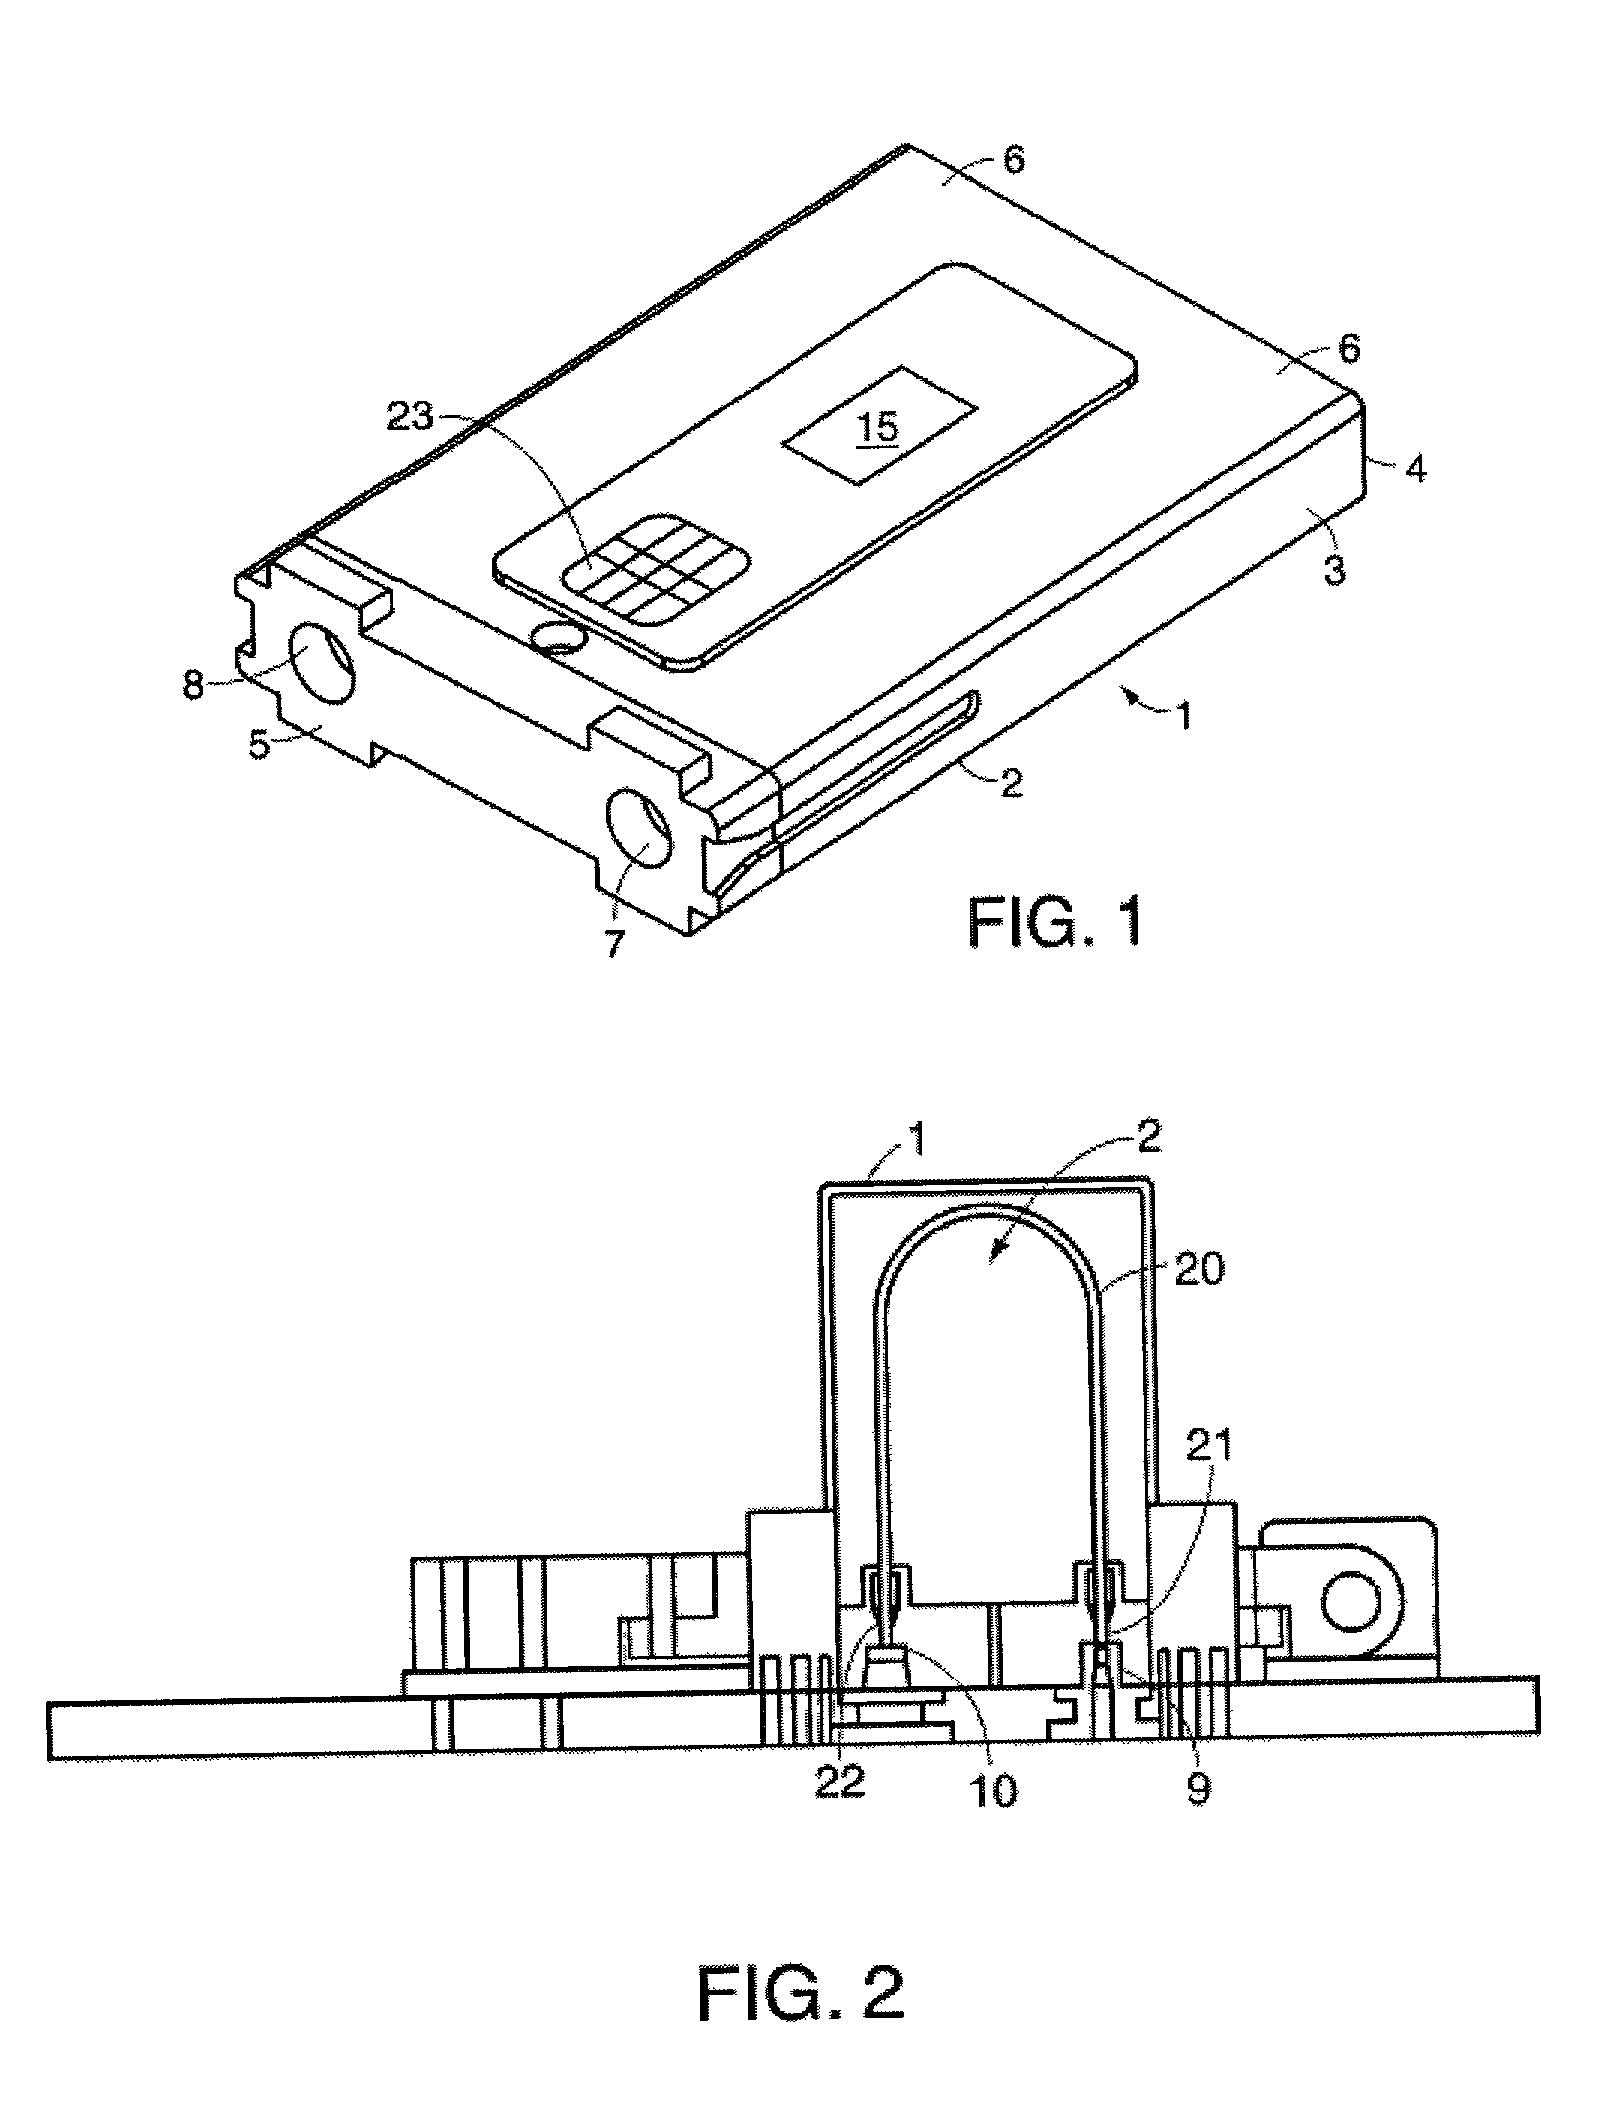 Fluid Separate conduit cartridge